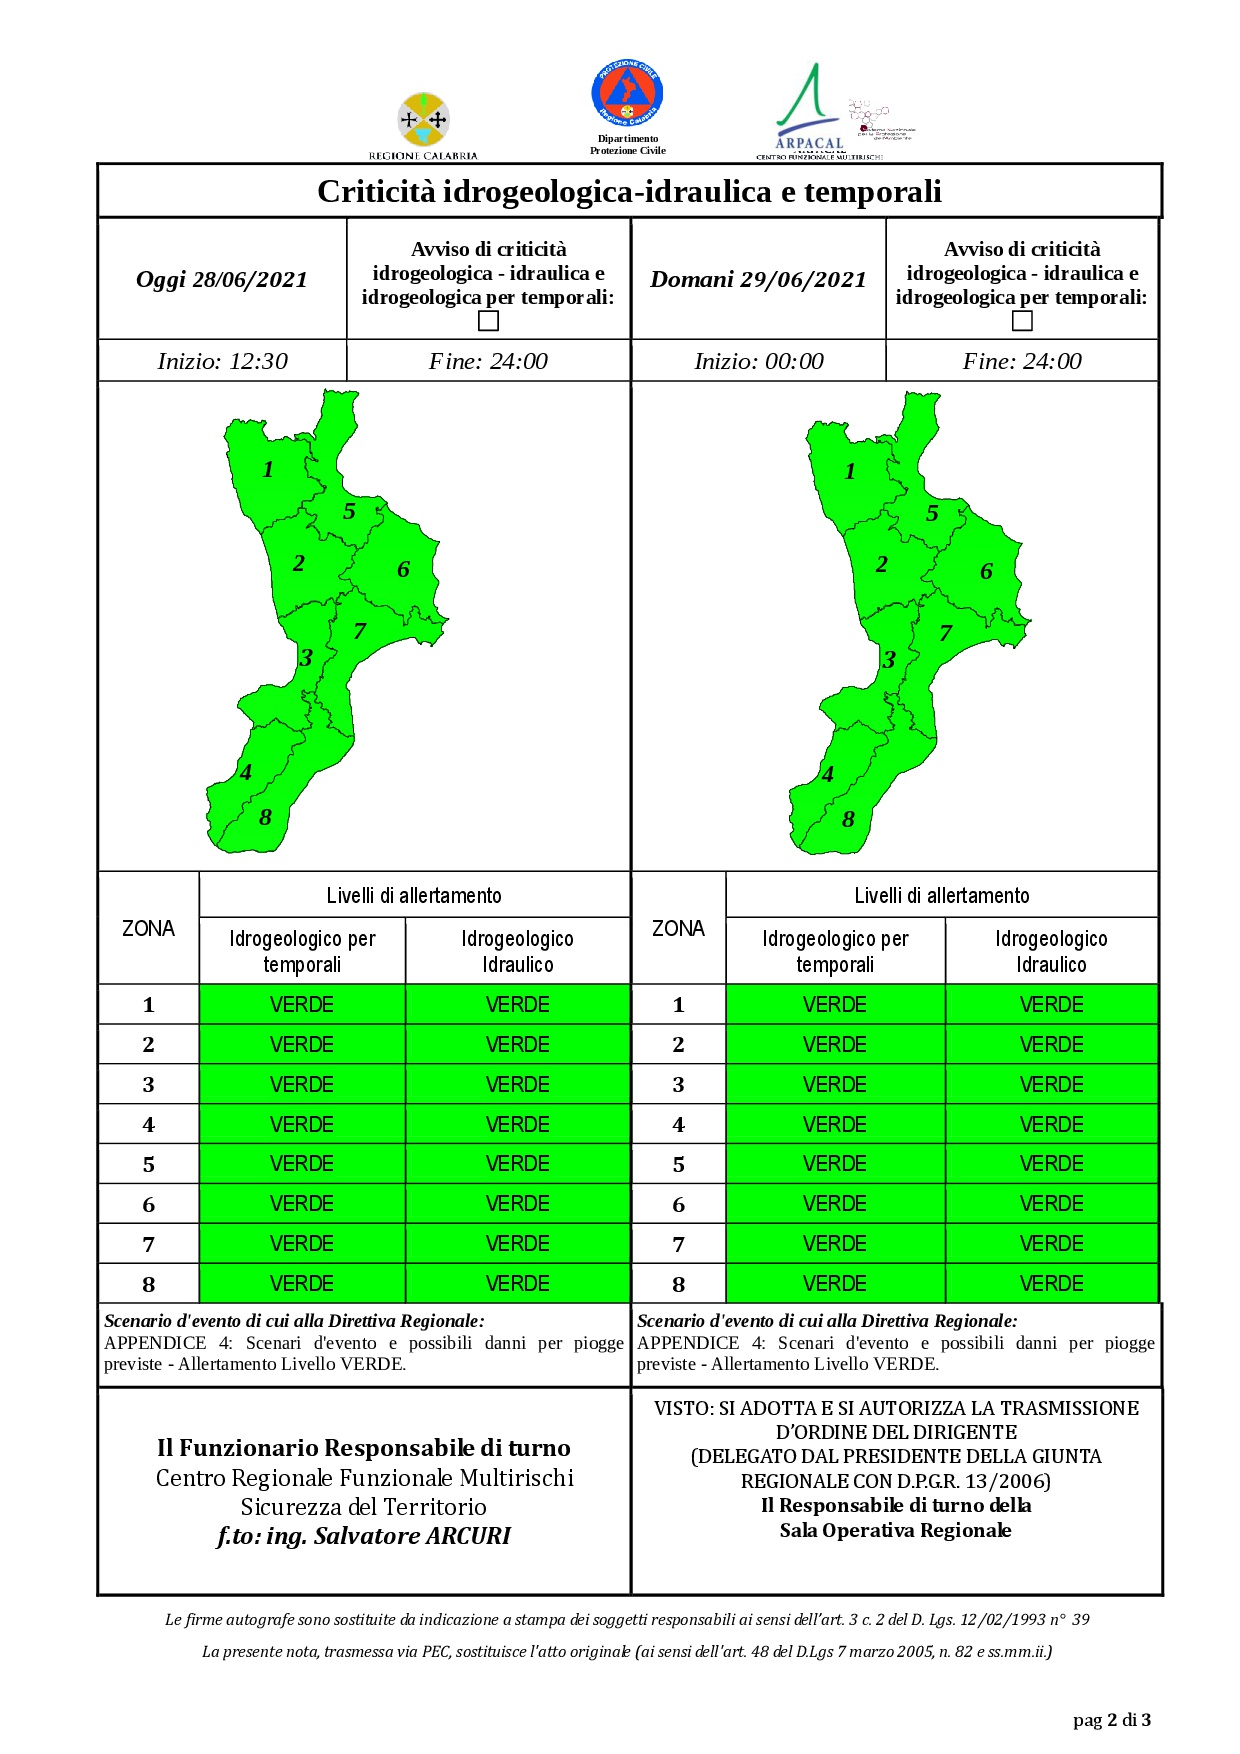 Criticità idrogeologica-idraulica e temporali in Calabria 28-06-2021